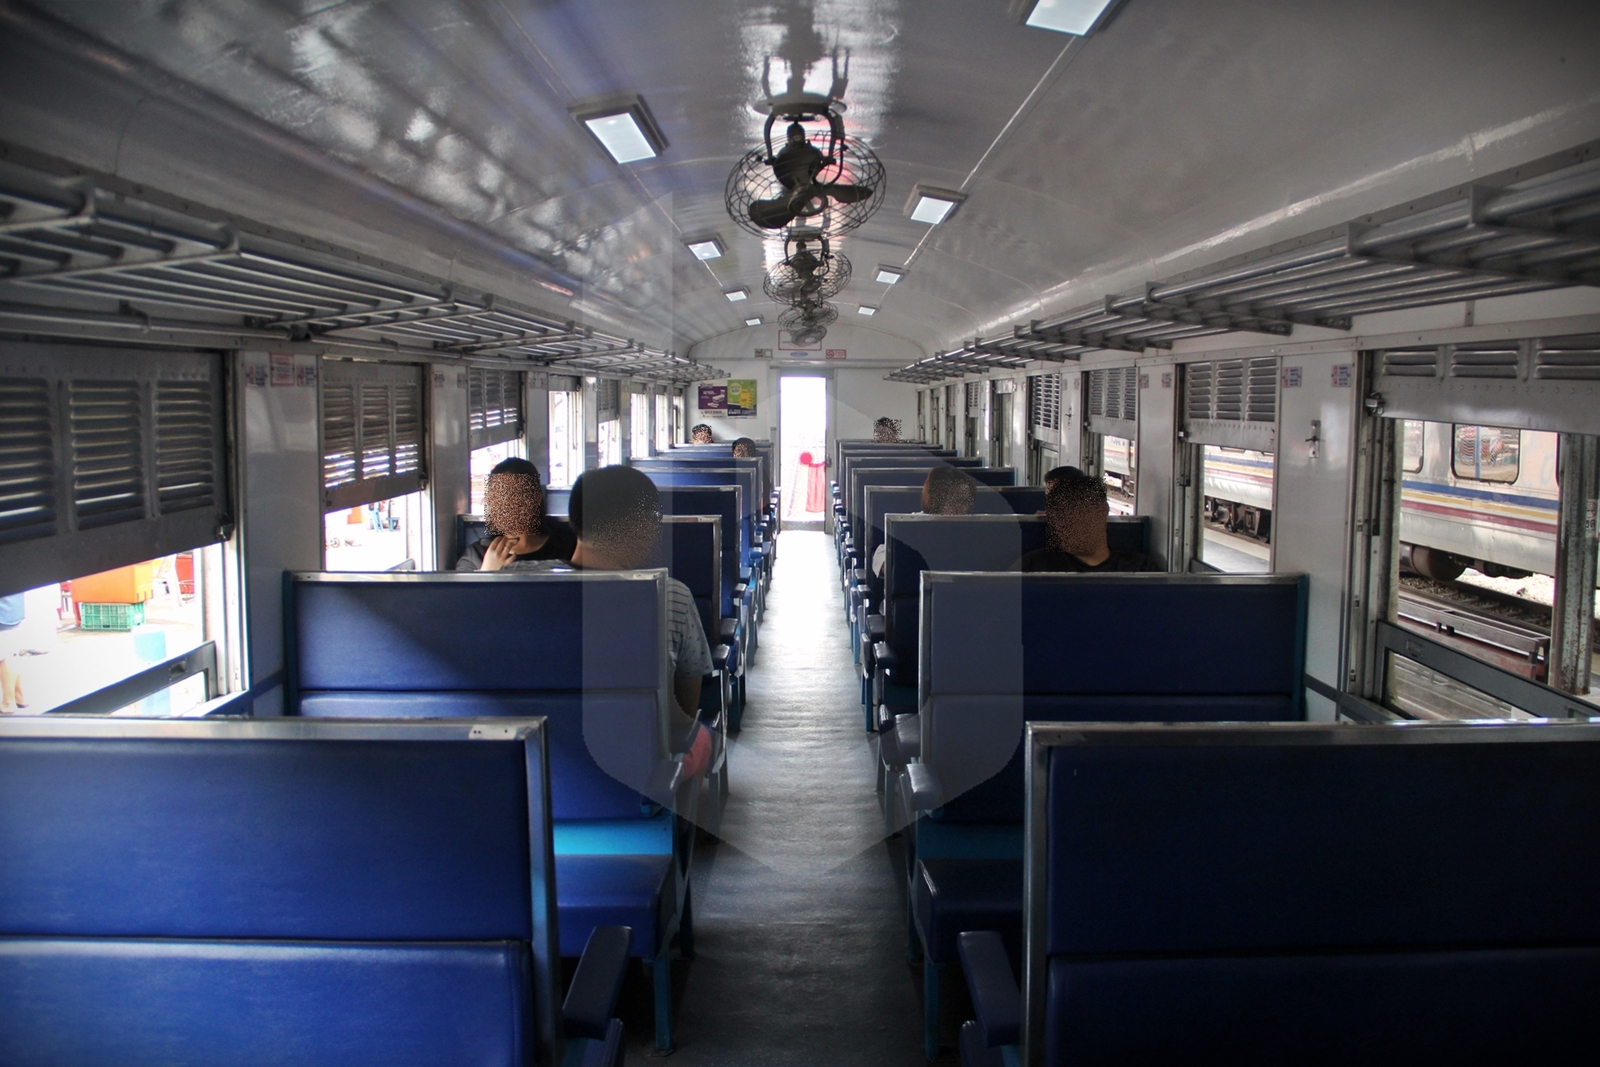 Hat Yai To Padang Besar By Shuttle Train